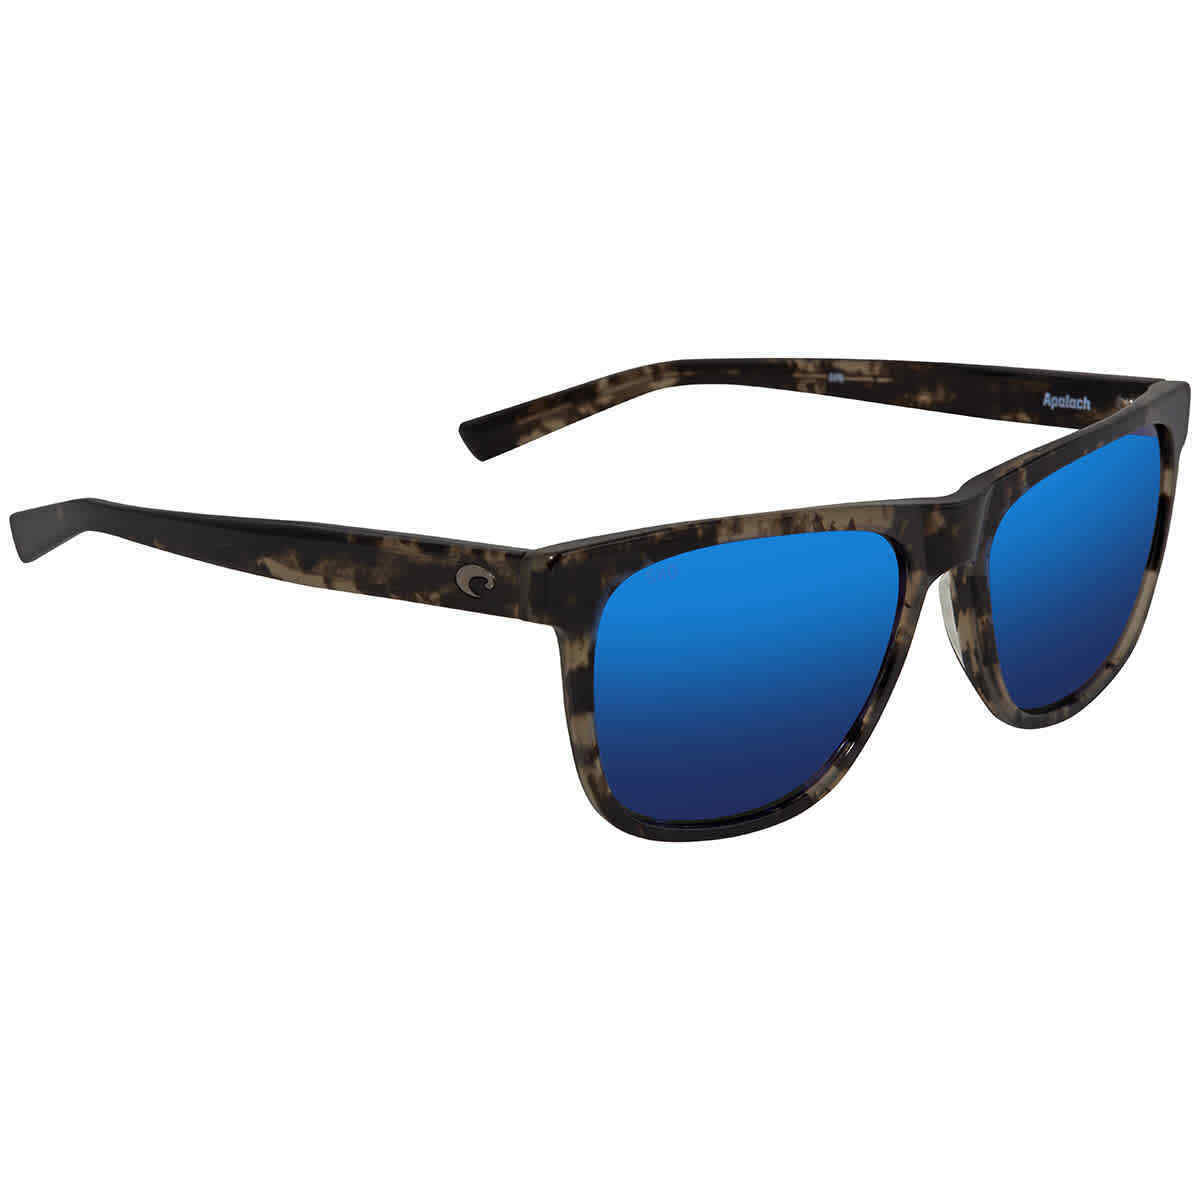 Costa Del Mar Apalach Polarized Sunglasses ShinyBlackKelp BlueMirror 580G